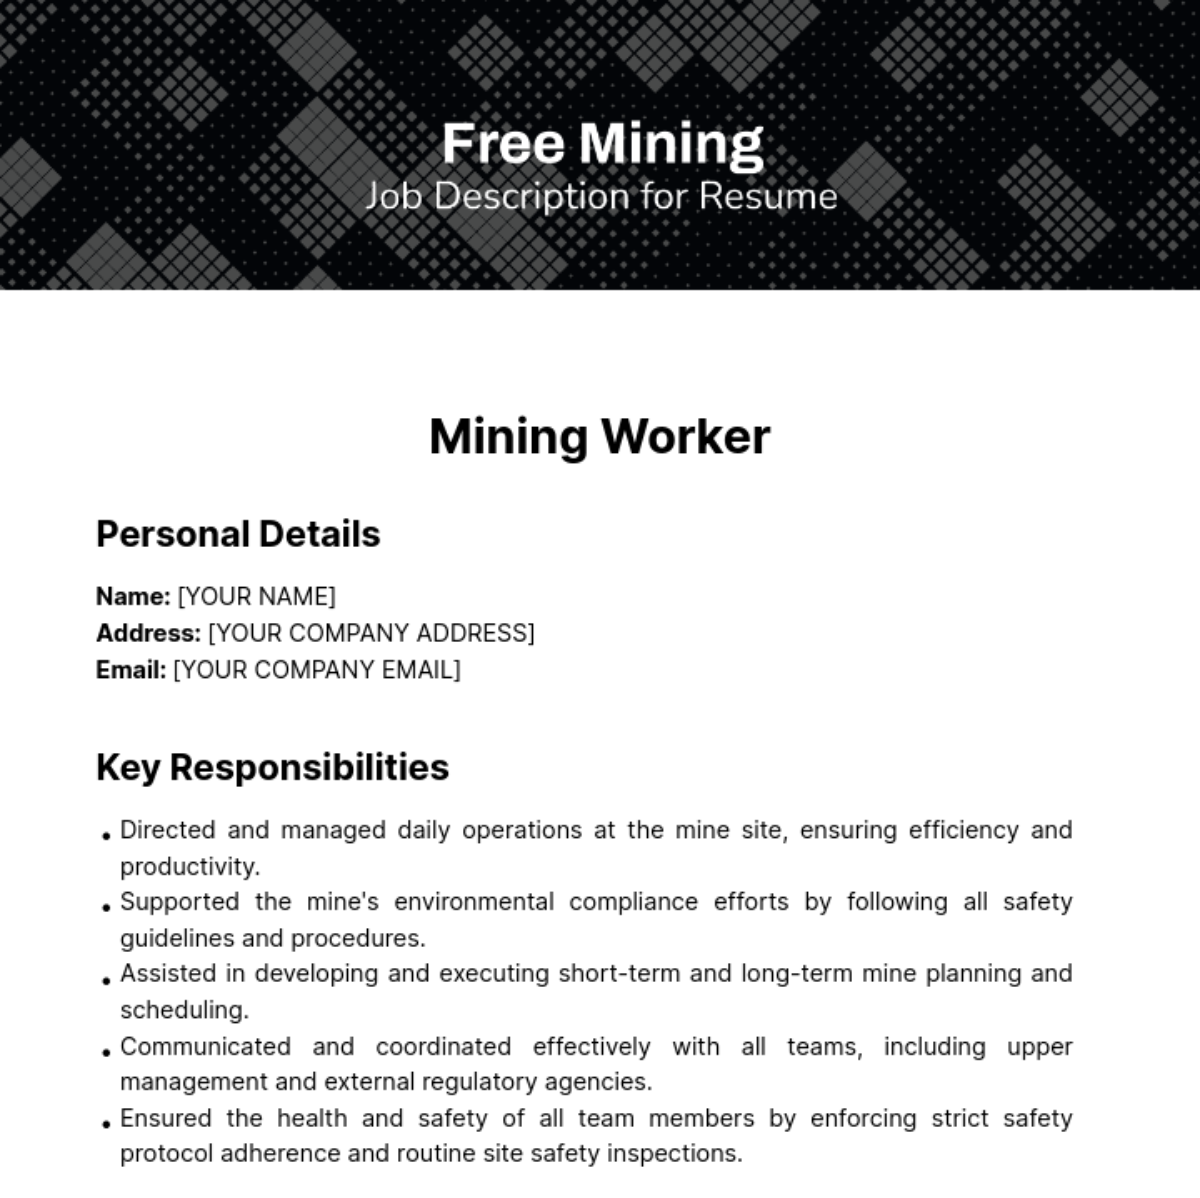 Mining Job Description for Resume Template